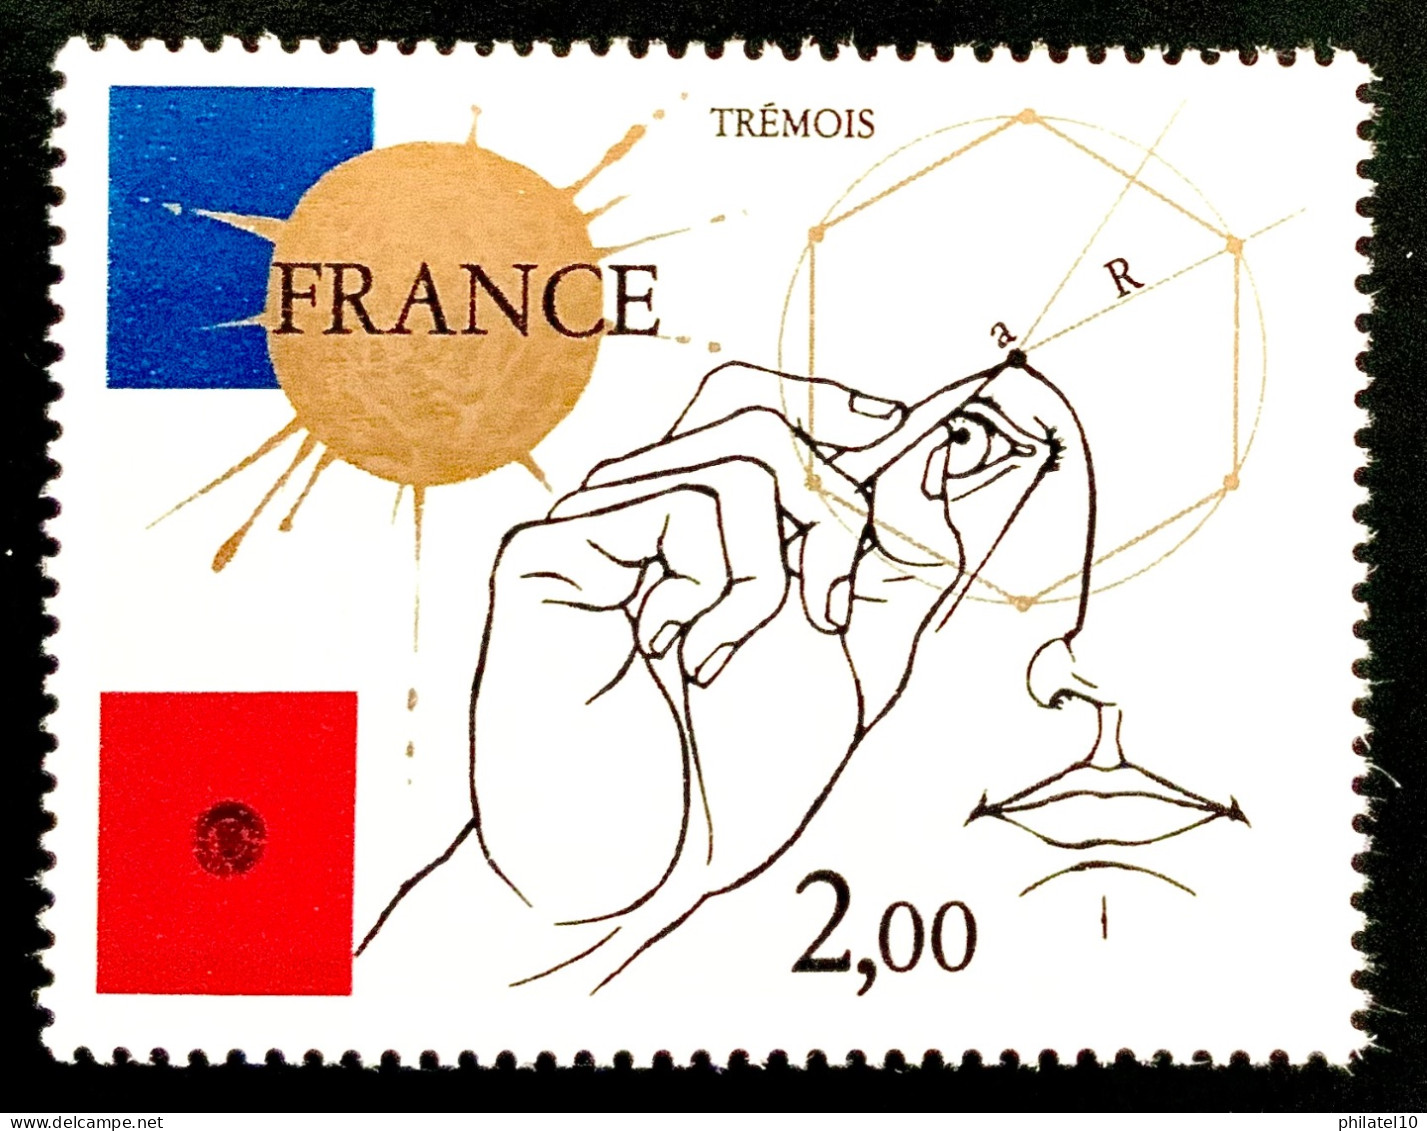 1981 FRANCE N 2141 TREMOIS 2,00F - NEUF** - Unused Stamps